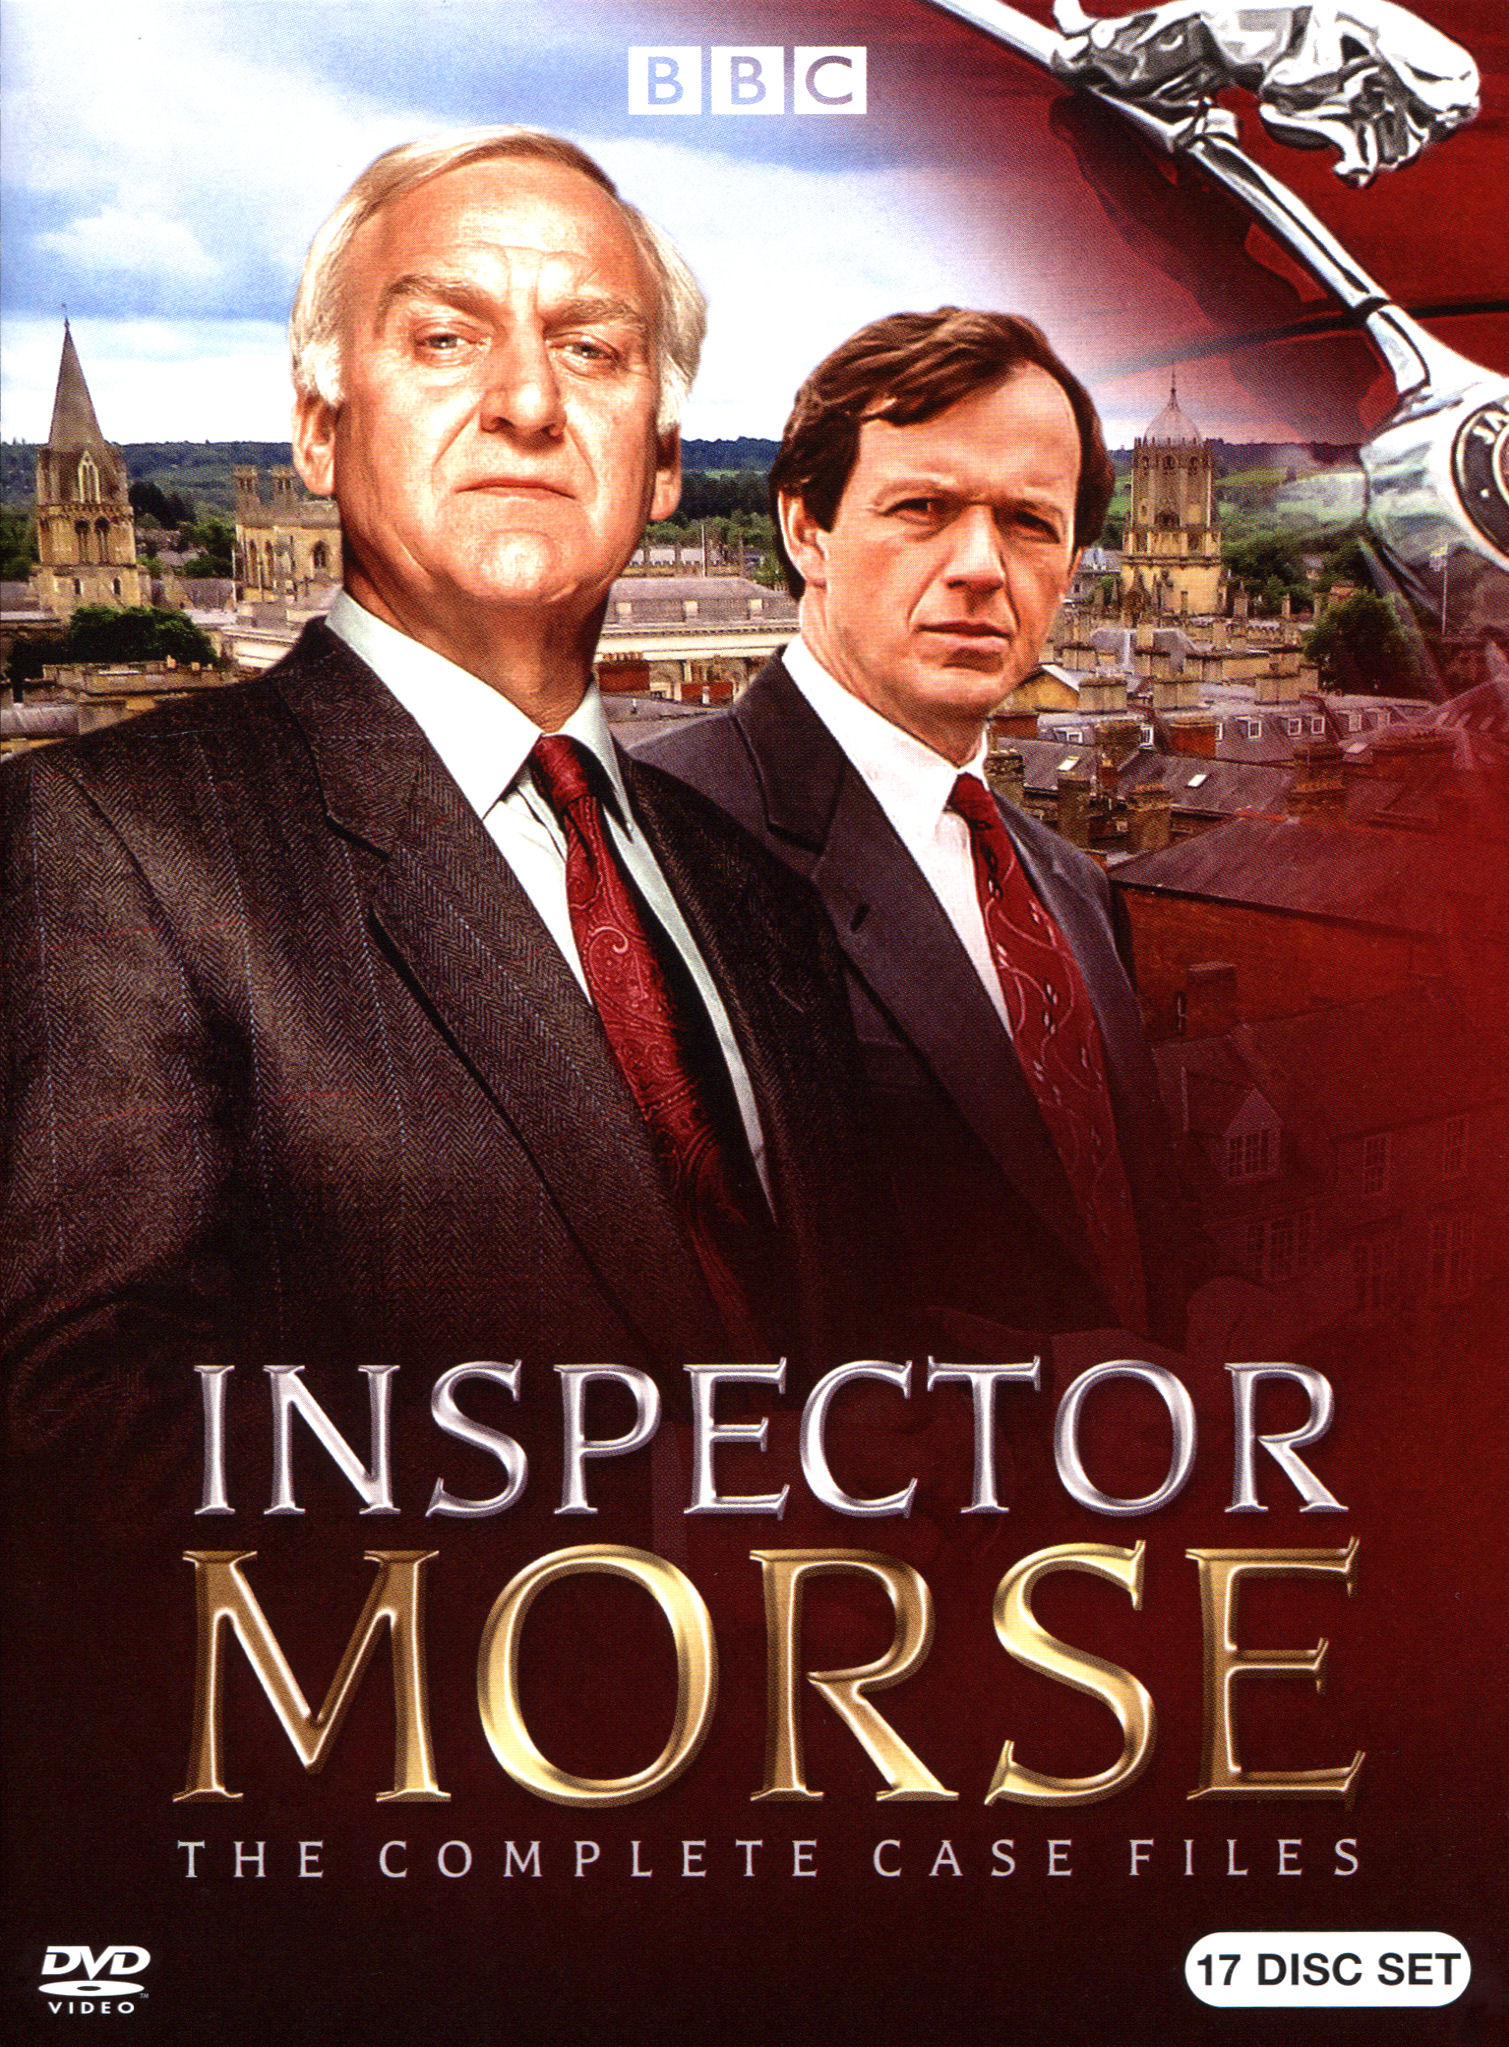 Inspector Morse DvD 12